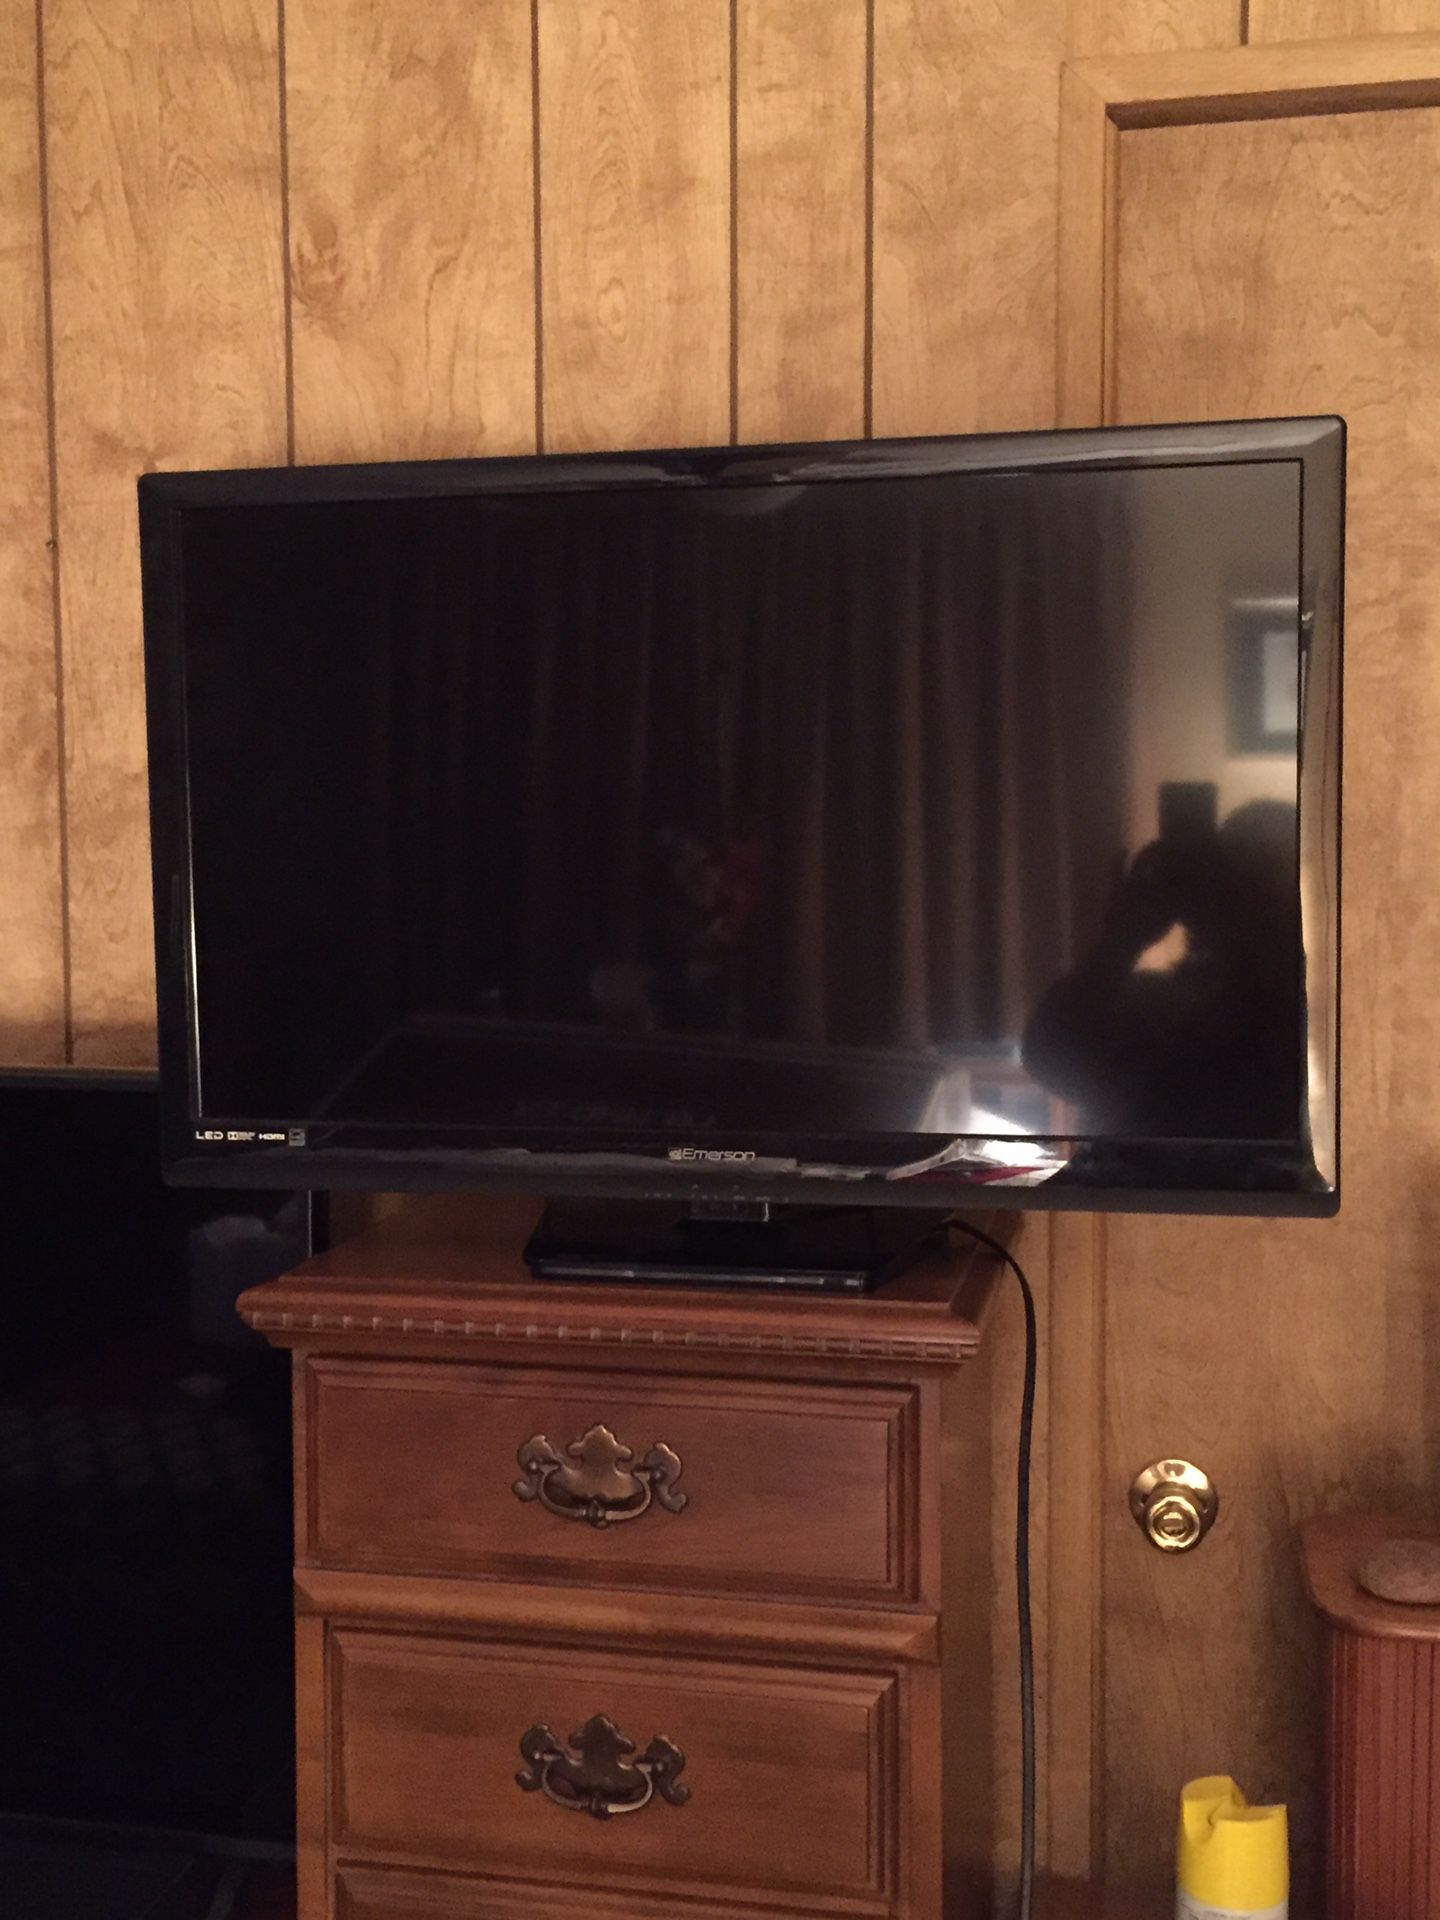 32 inch Emerson Flat screen tv